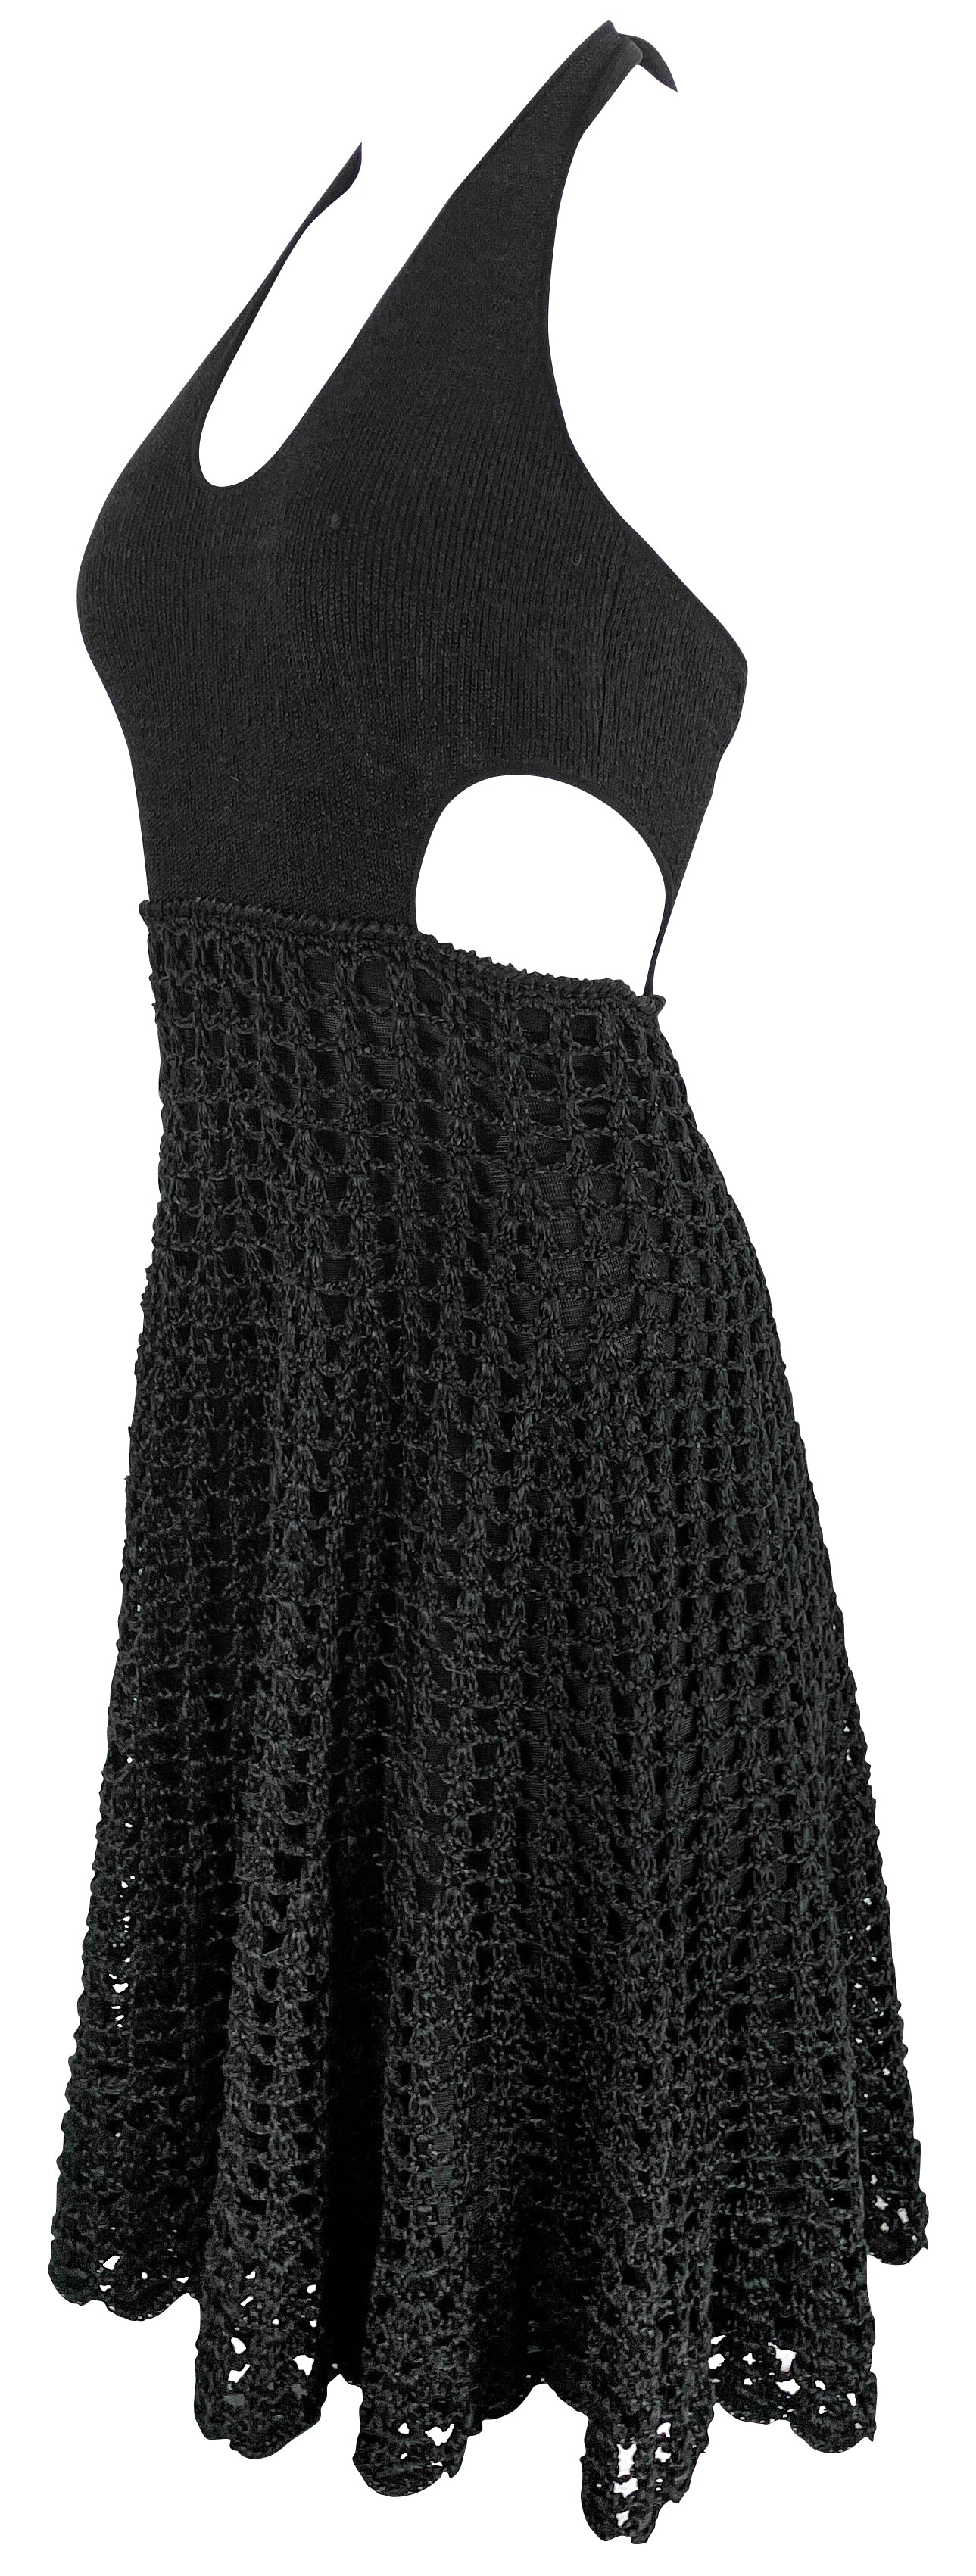 Proenza Schouler Knit Halter Dress with Crochet Skirt in Black - Discounts on Proenza Schouler at UAL